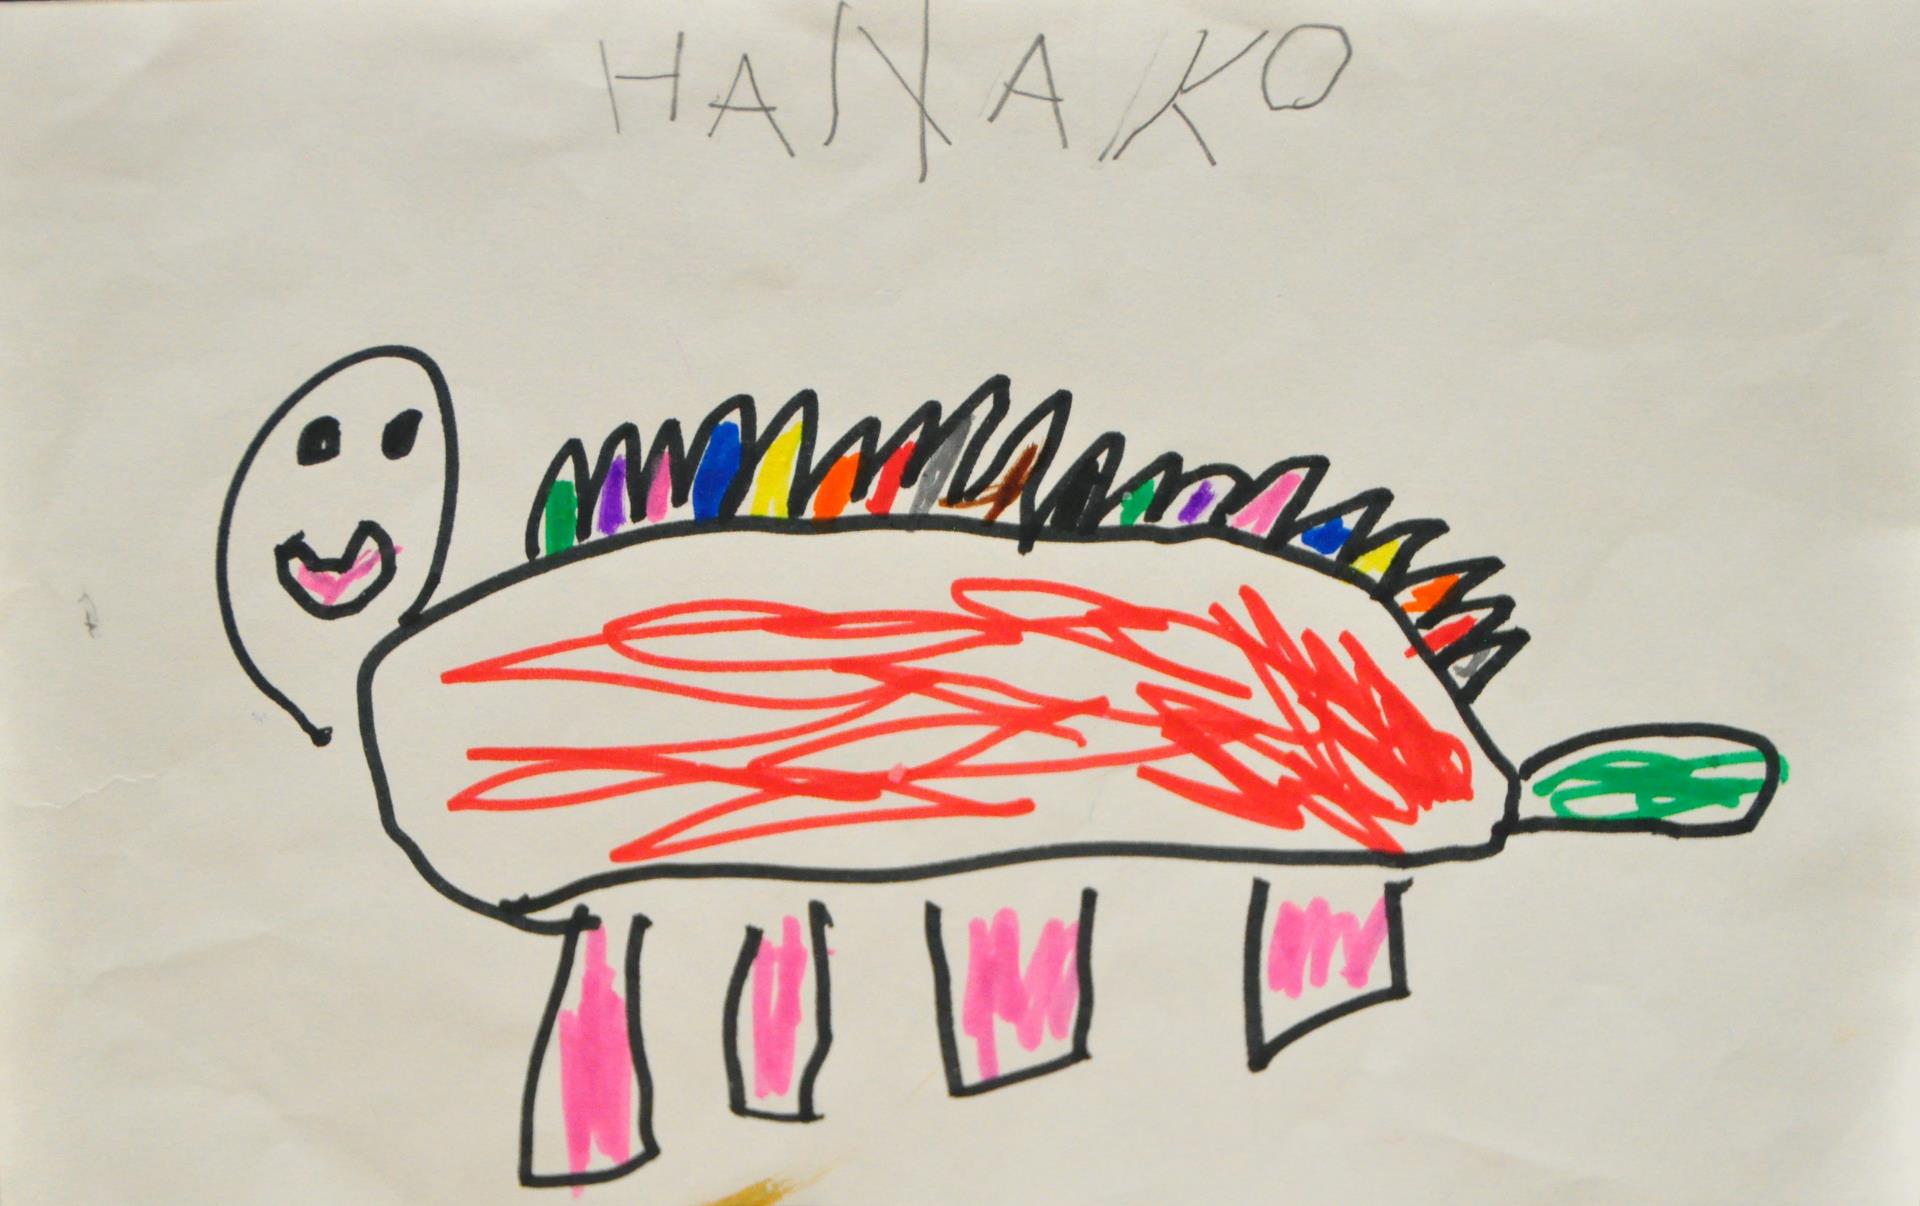 Hanako - The Stegosaurus Has 17 Plates or More